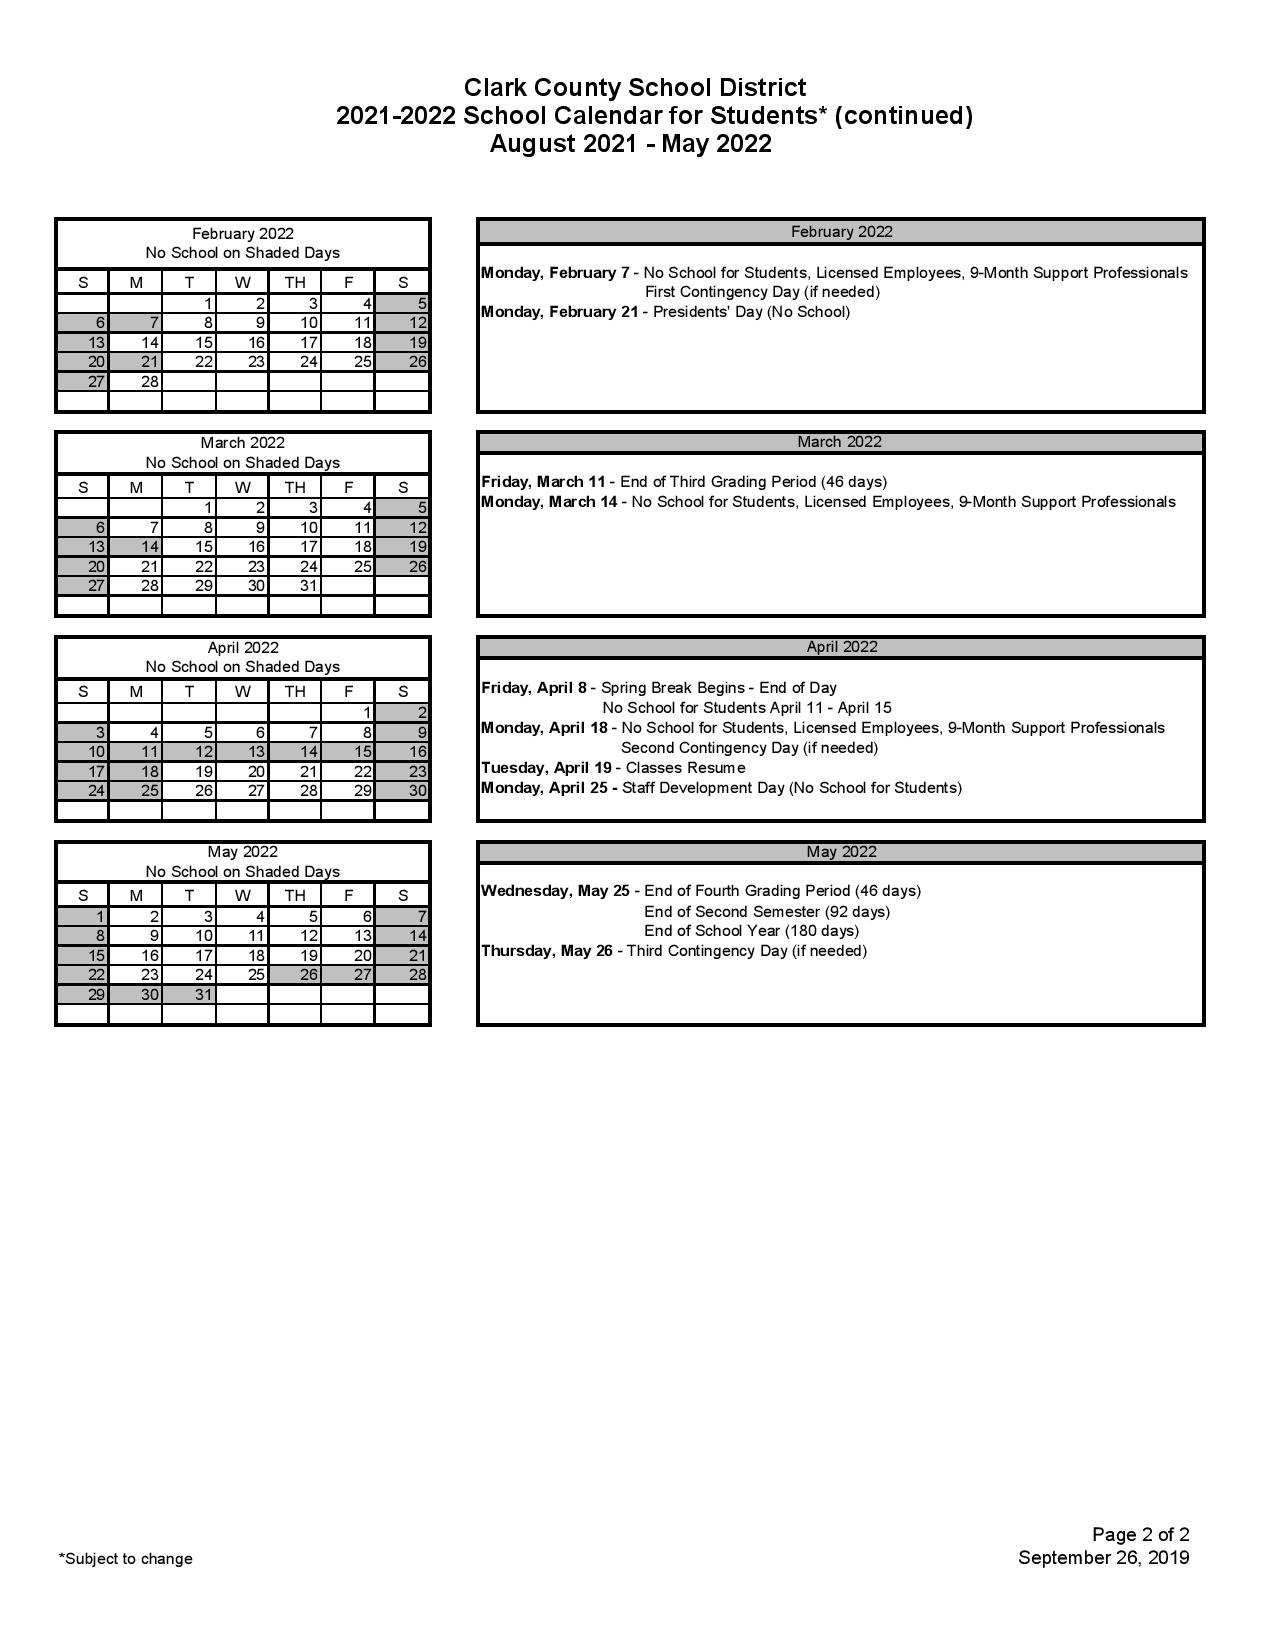 Fulton County Calendar 2022 23 Ccsd School Calendar 2021-2022 - Clark County School District